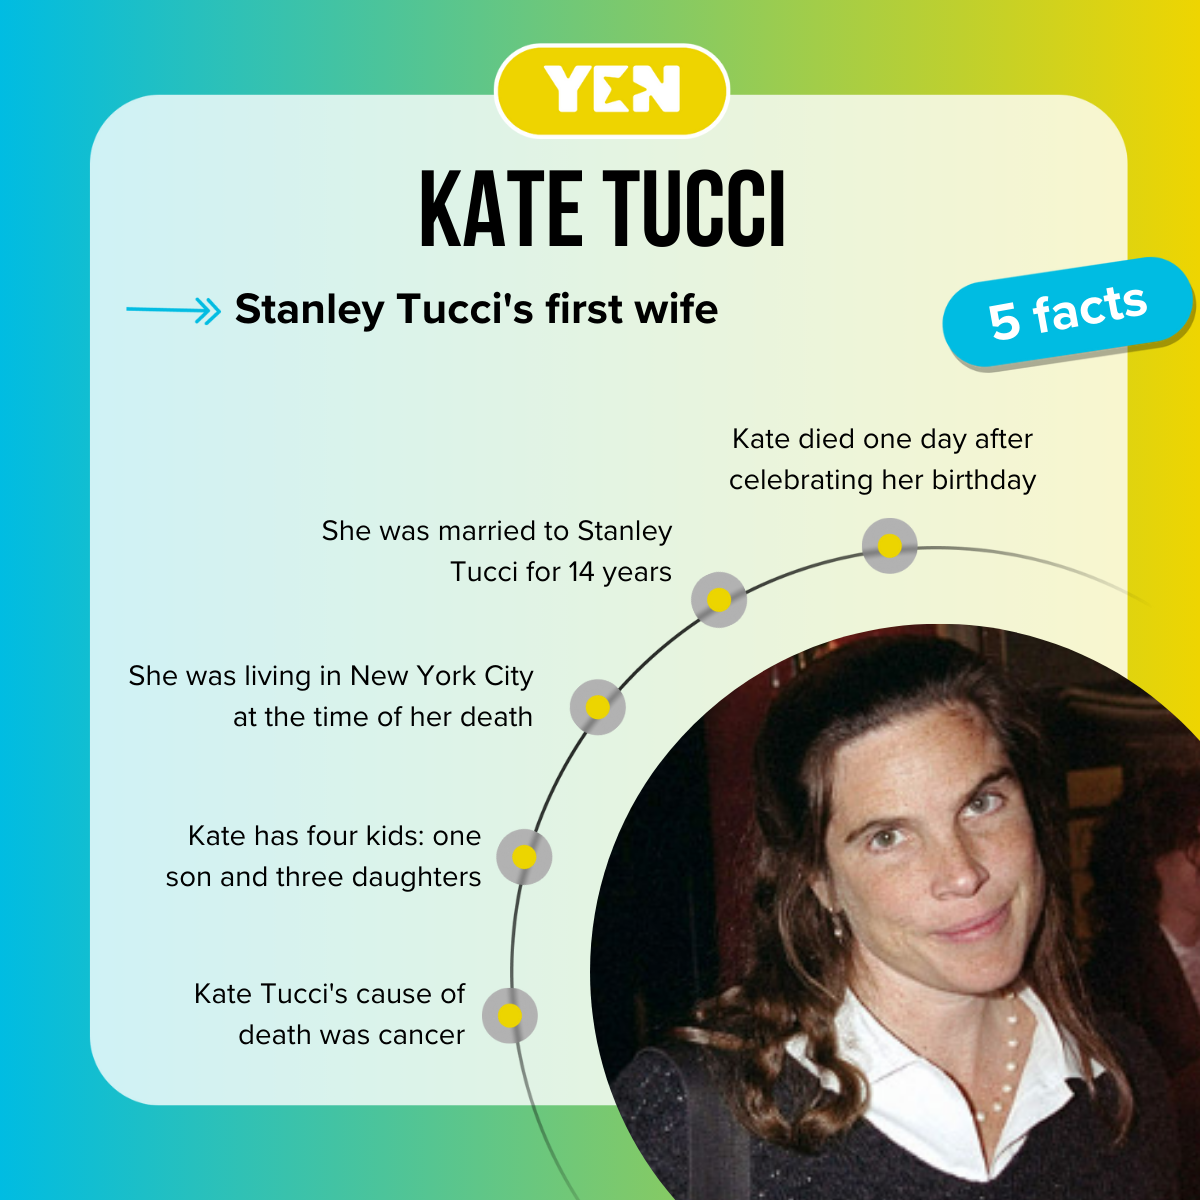 Kate Tucci's biography